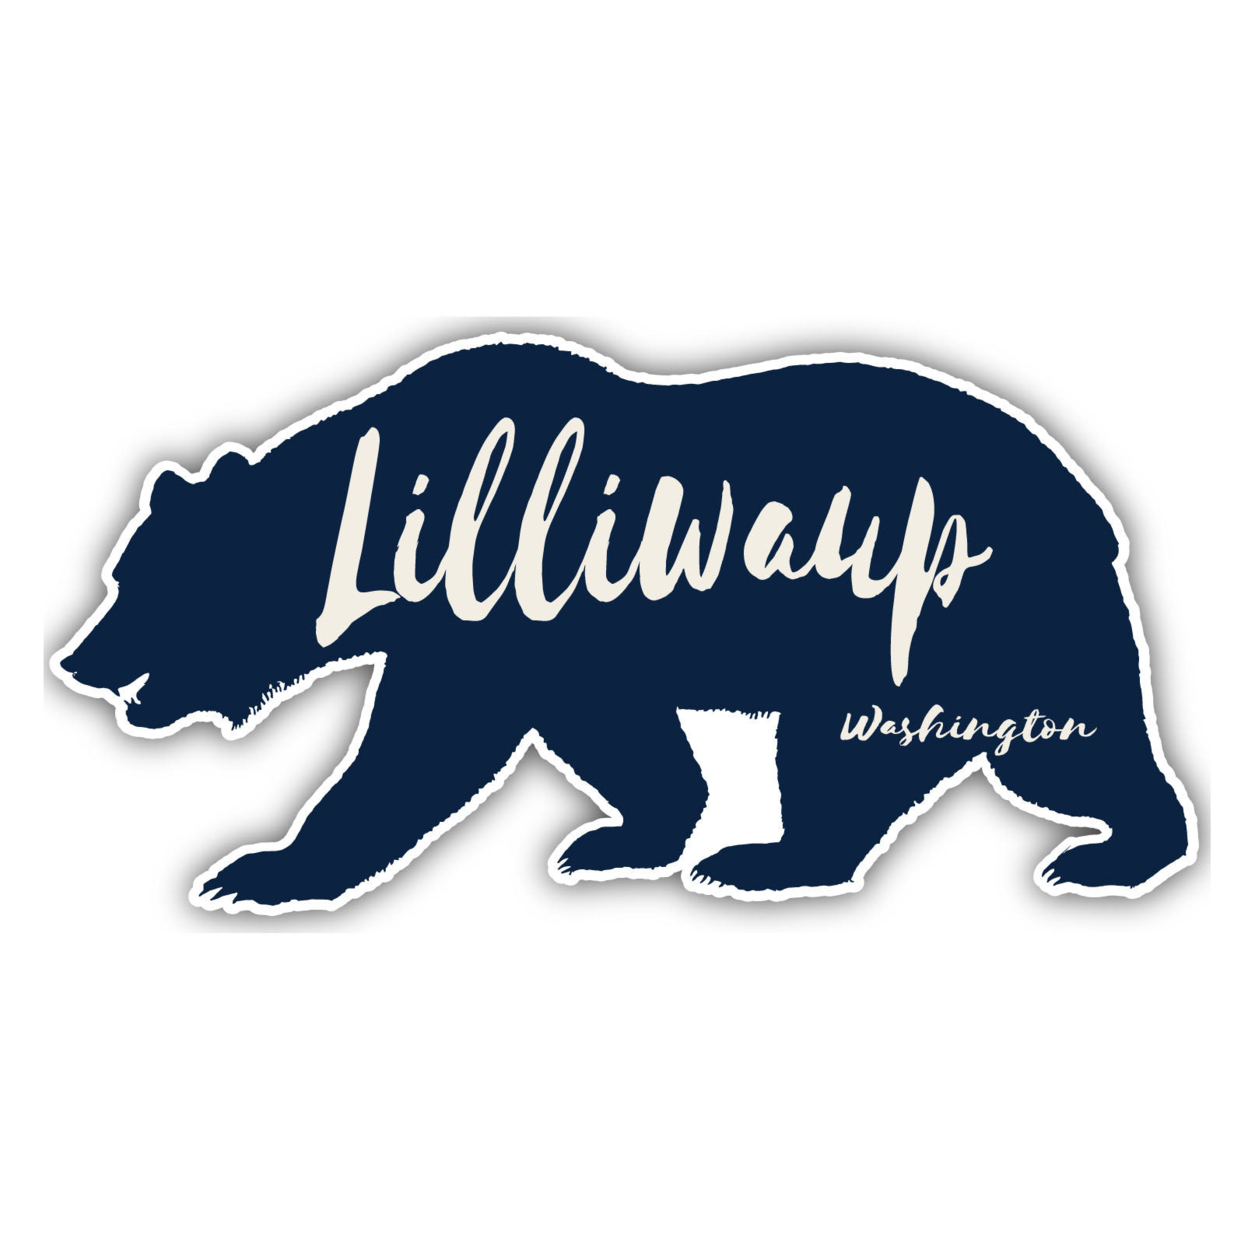 Lilliwaup Washington Souvenir Decorative Stickers (Choose Theme And Size) - 4-Inch, Bear